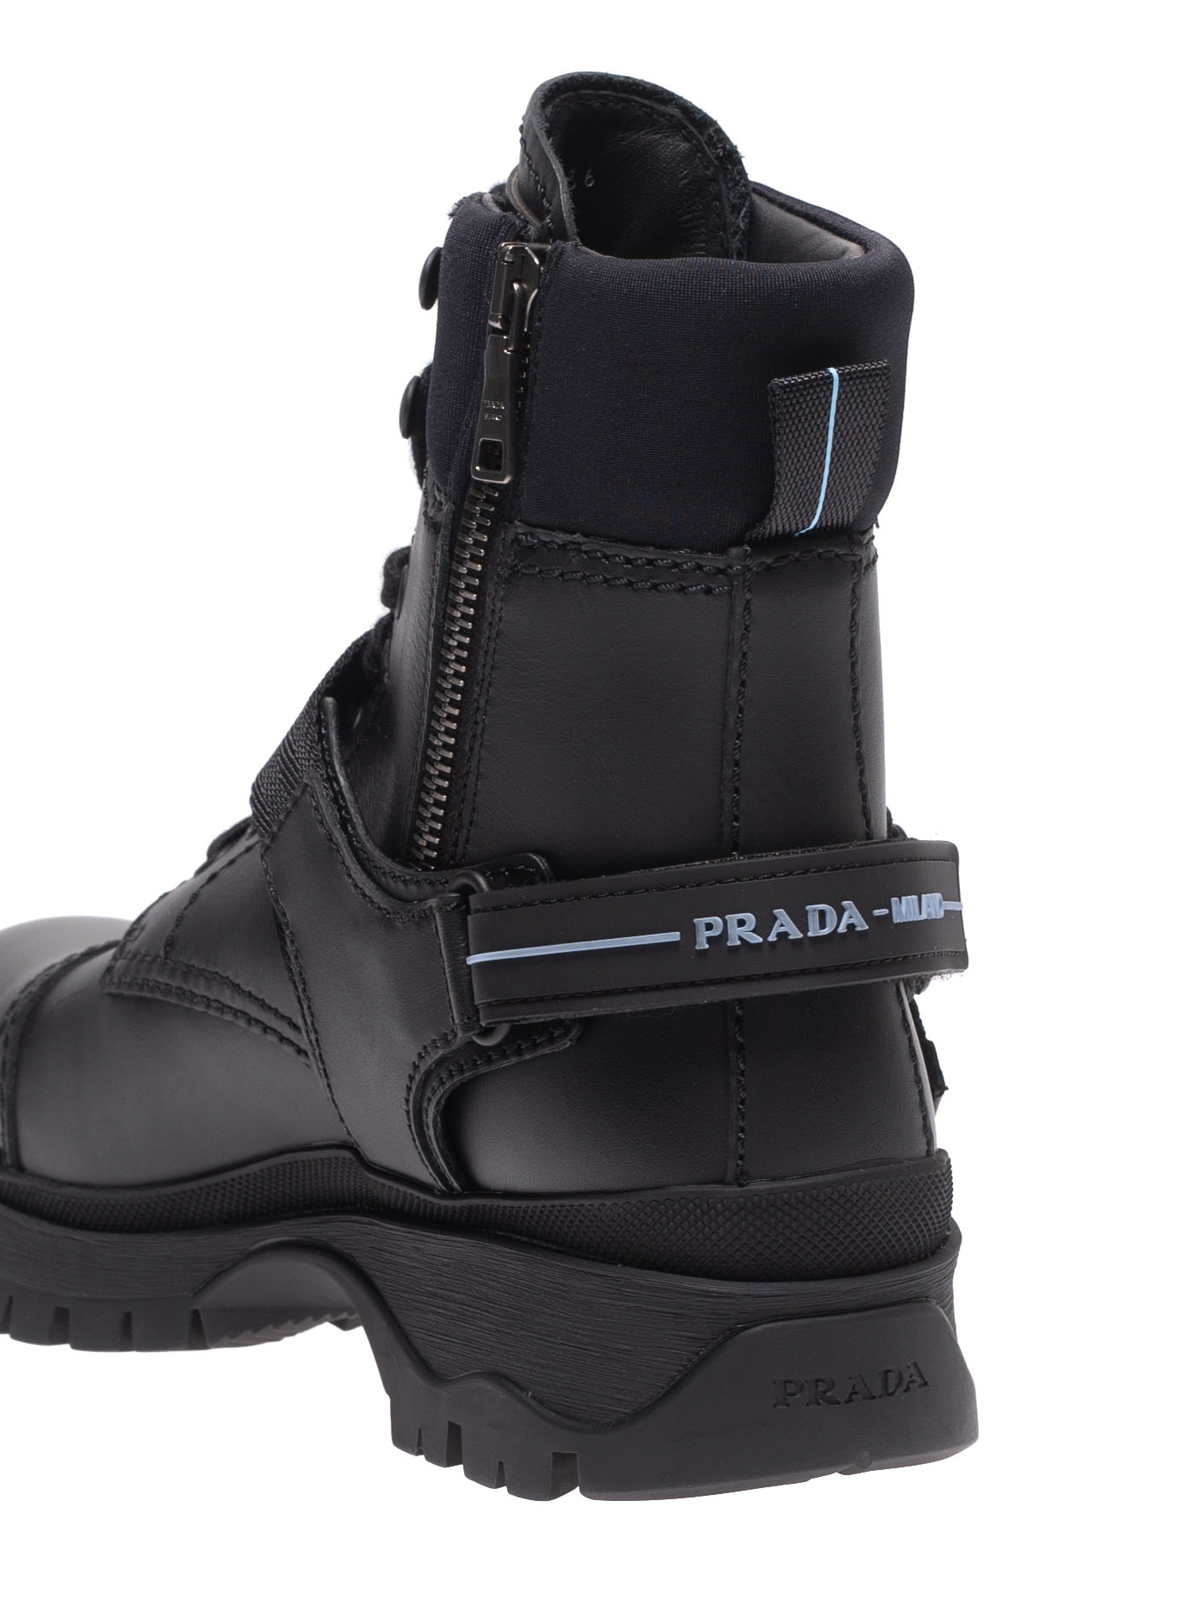 prada buckle boots